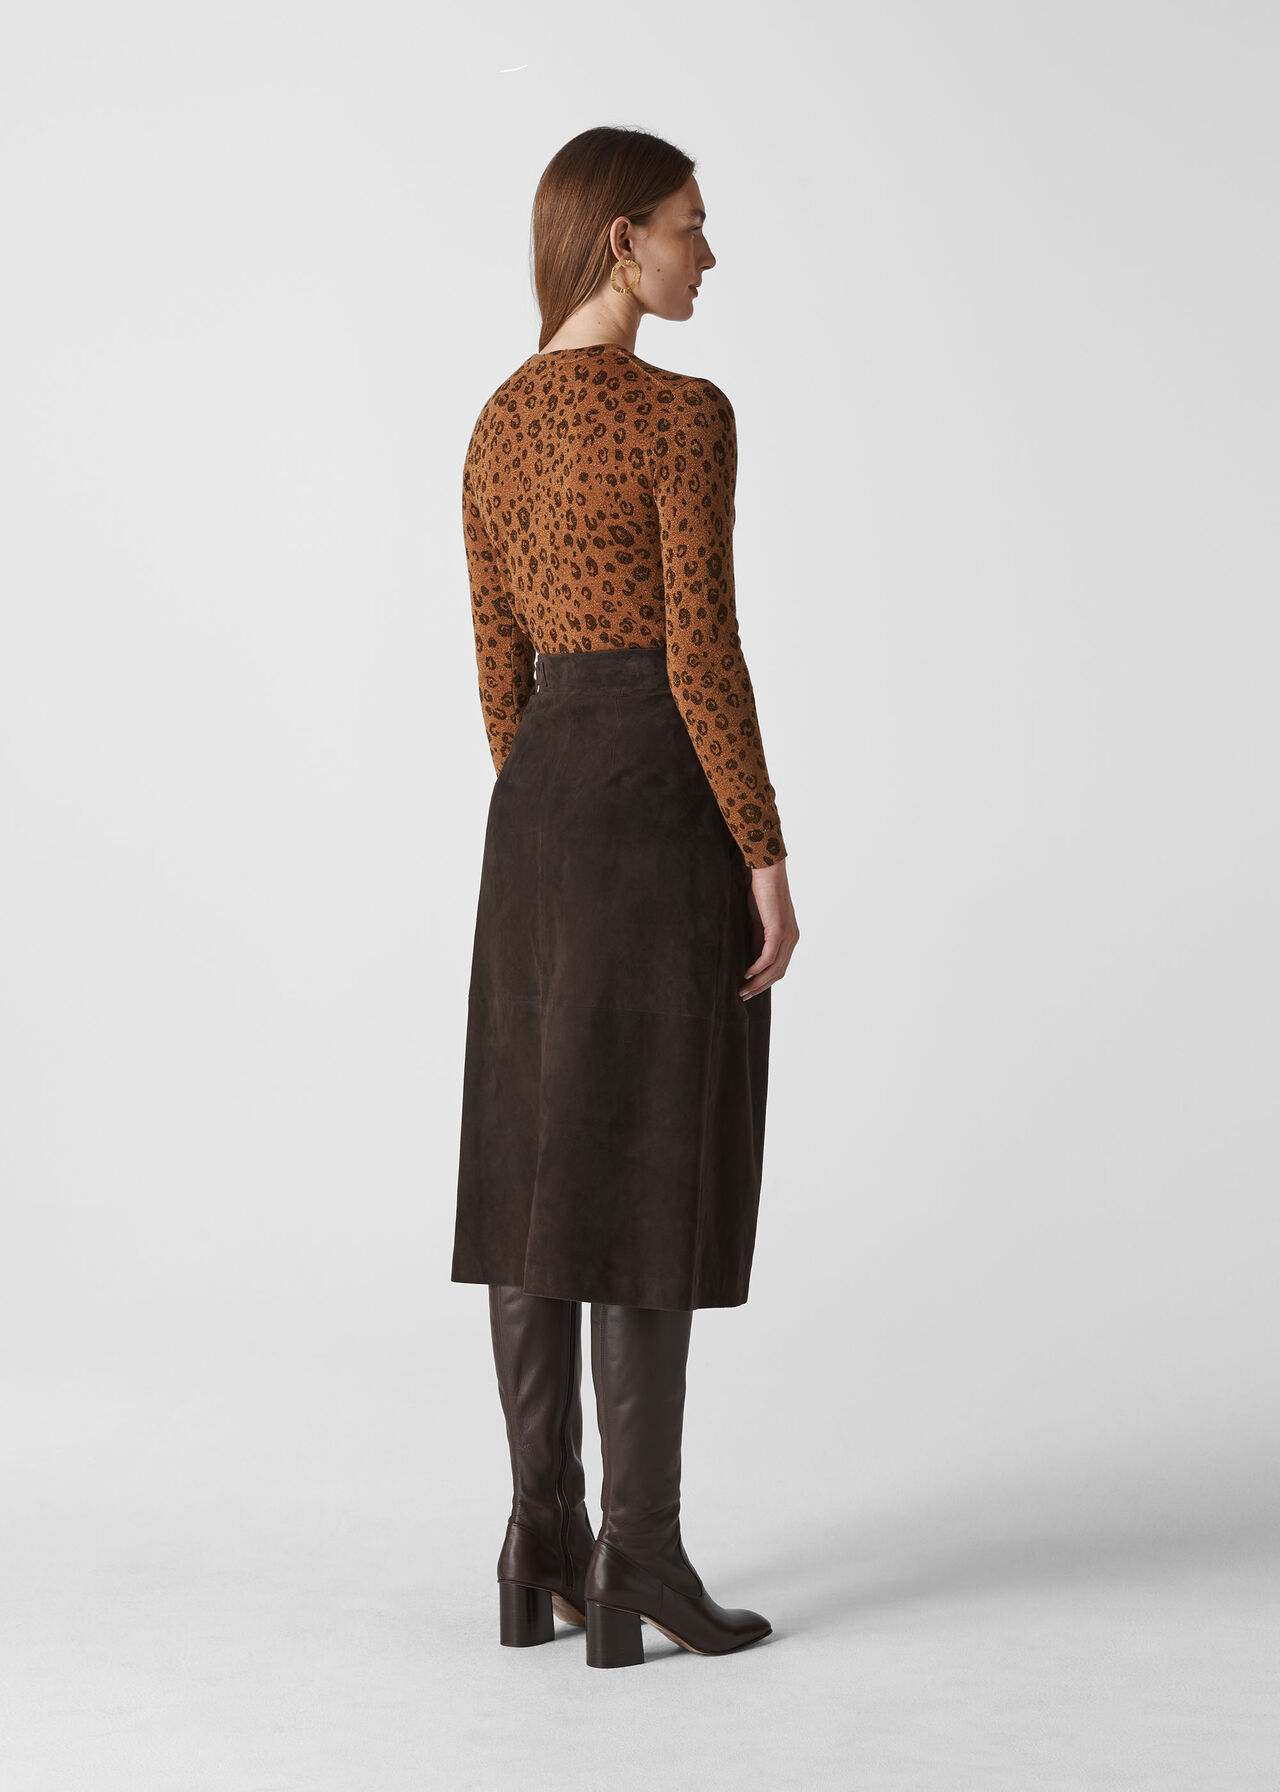 Brown/Multi Cheetah Printed Sparkle Knit | WHISTLES